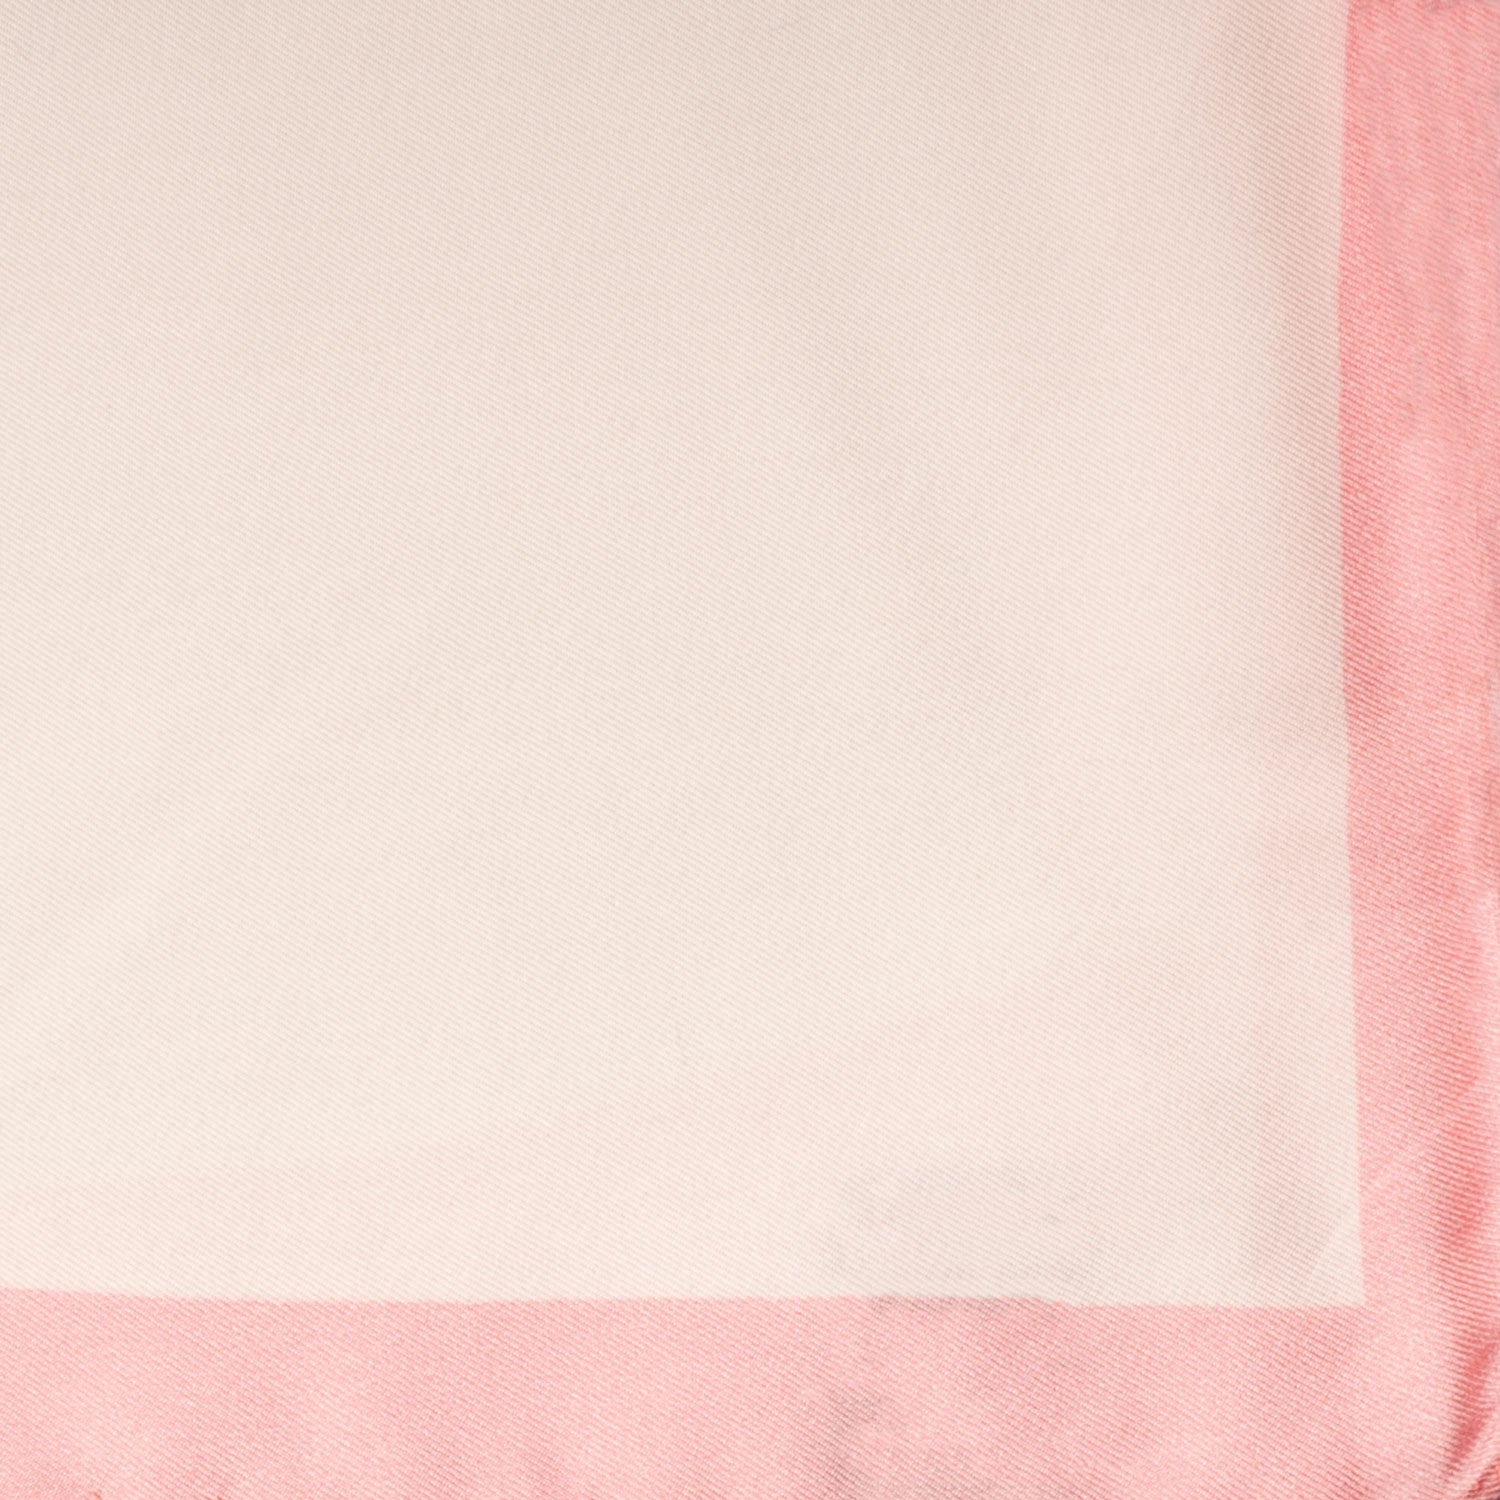 Fazzoletto da Taschino Vintage di Seta Bianco Rosa Tinta Unita POCV734 Dettaglio